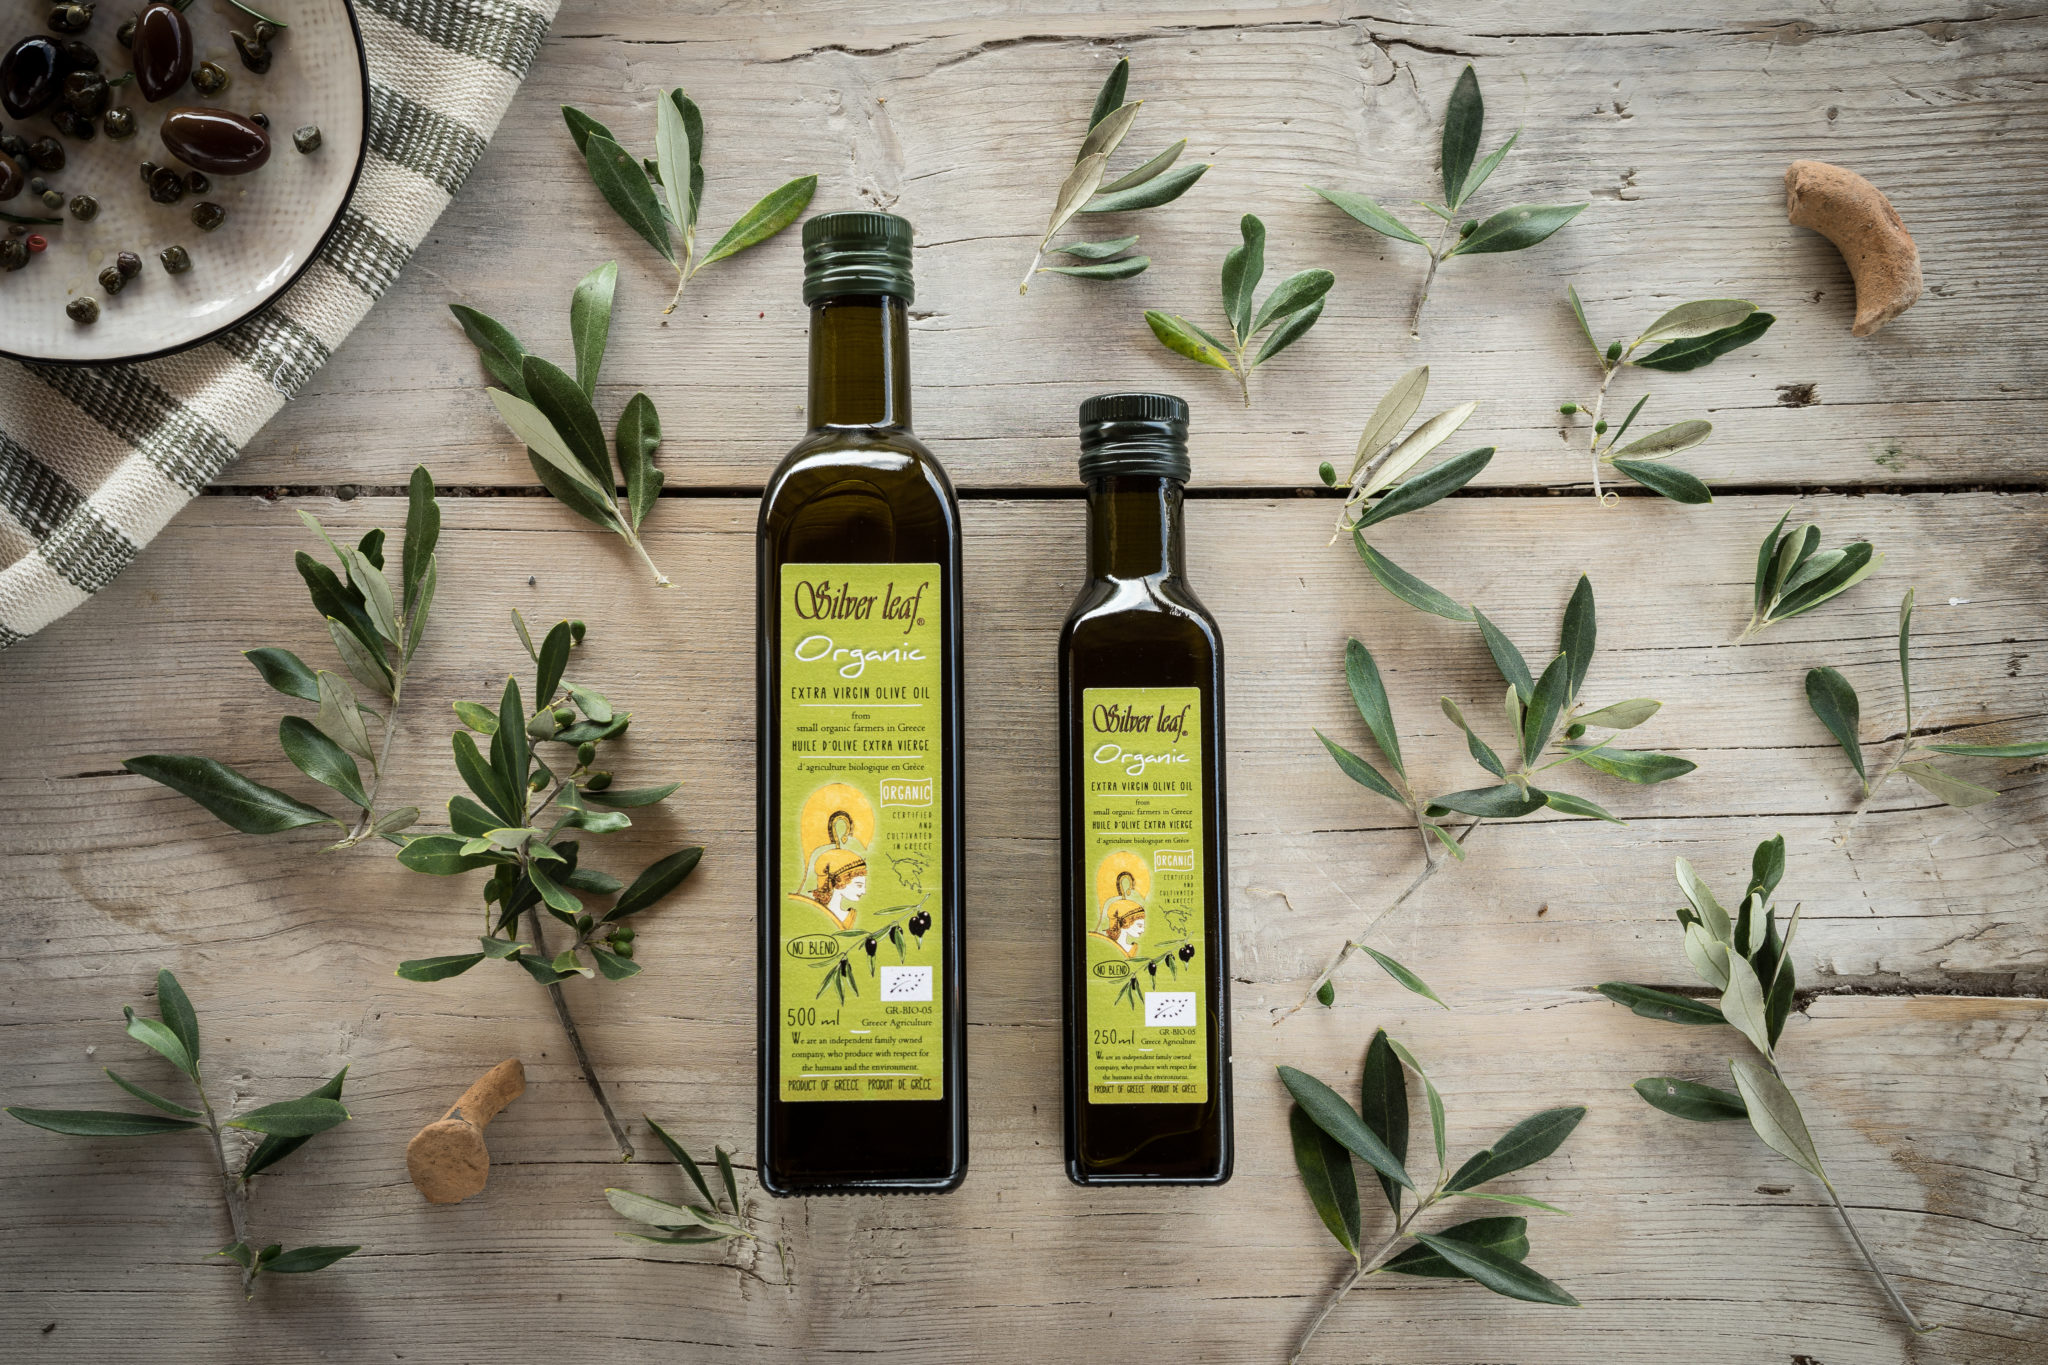 greek organic extra virgin olive oil from organic farmers